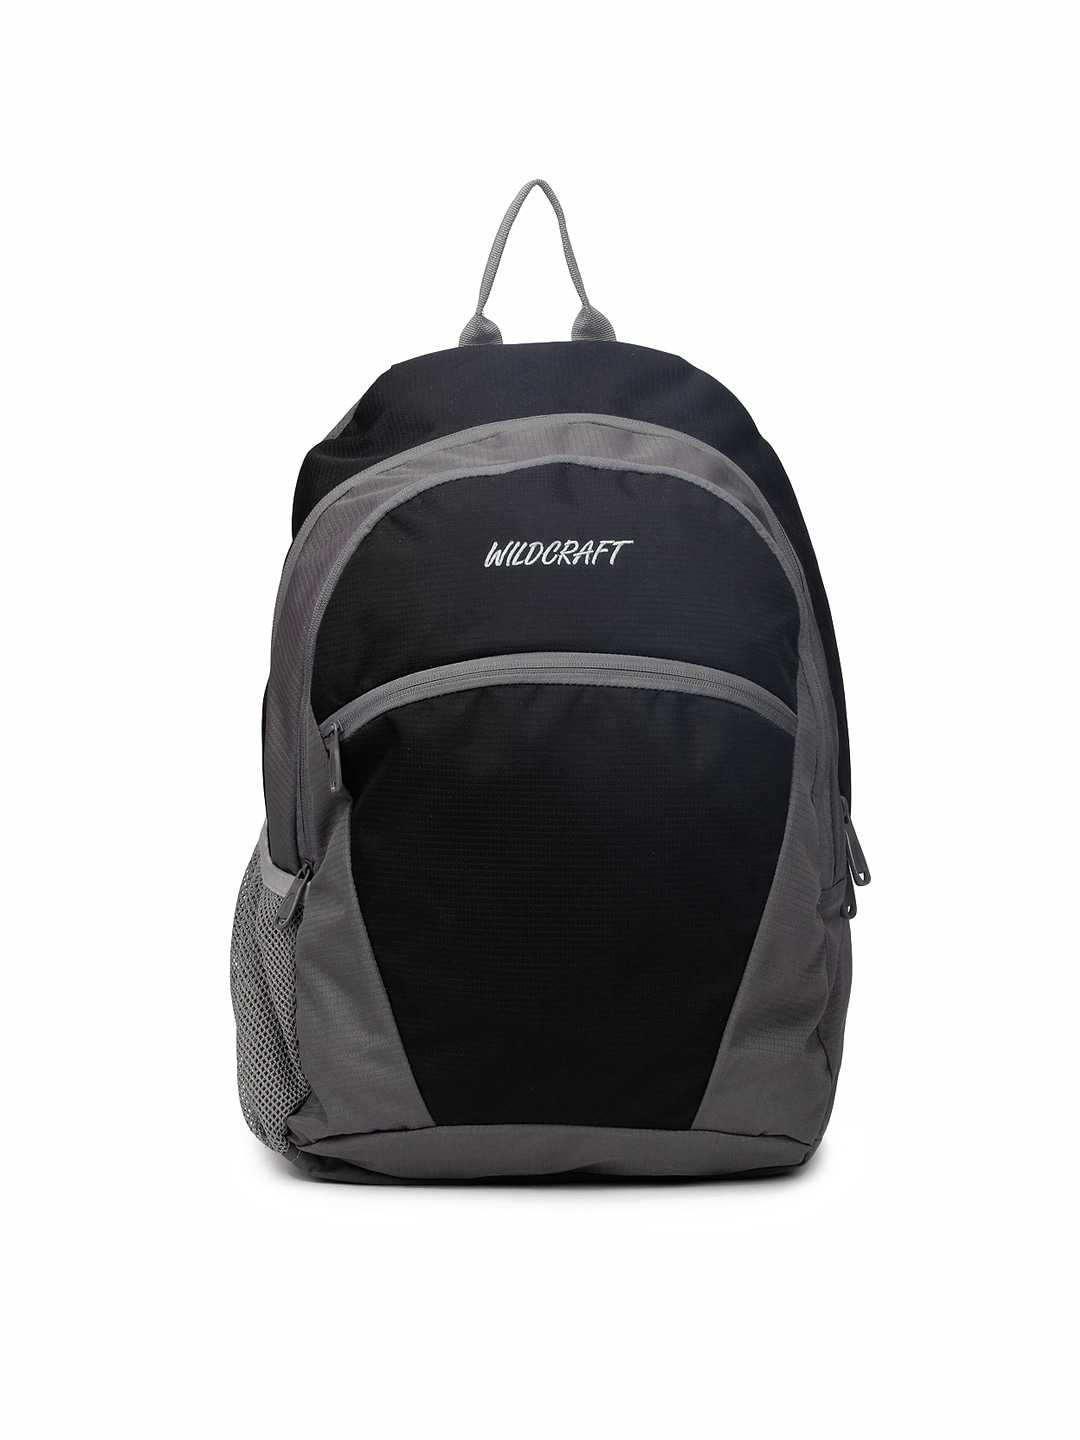 Wildcraft Unisex Acute Black and Grey Backpack